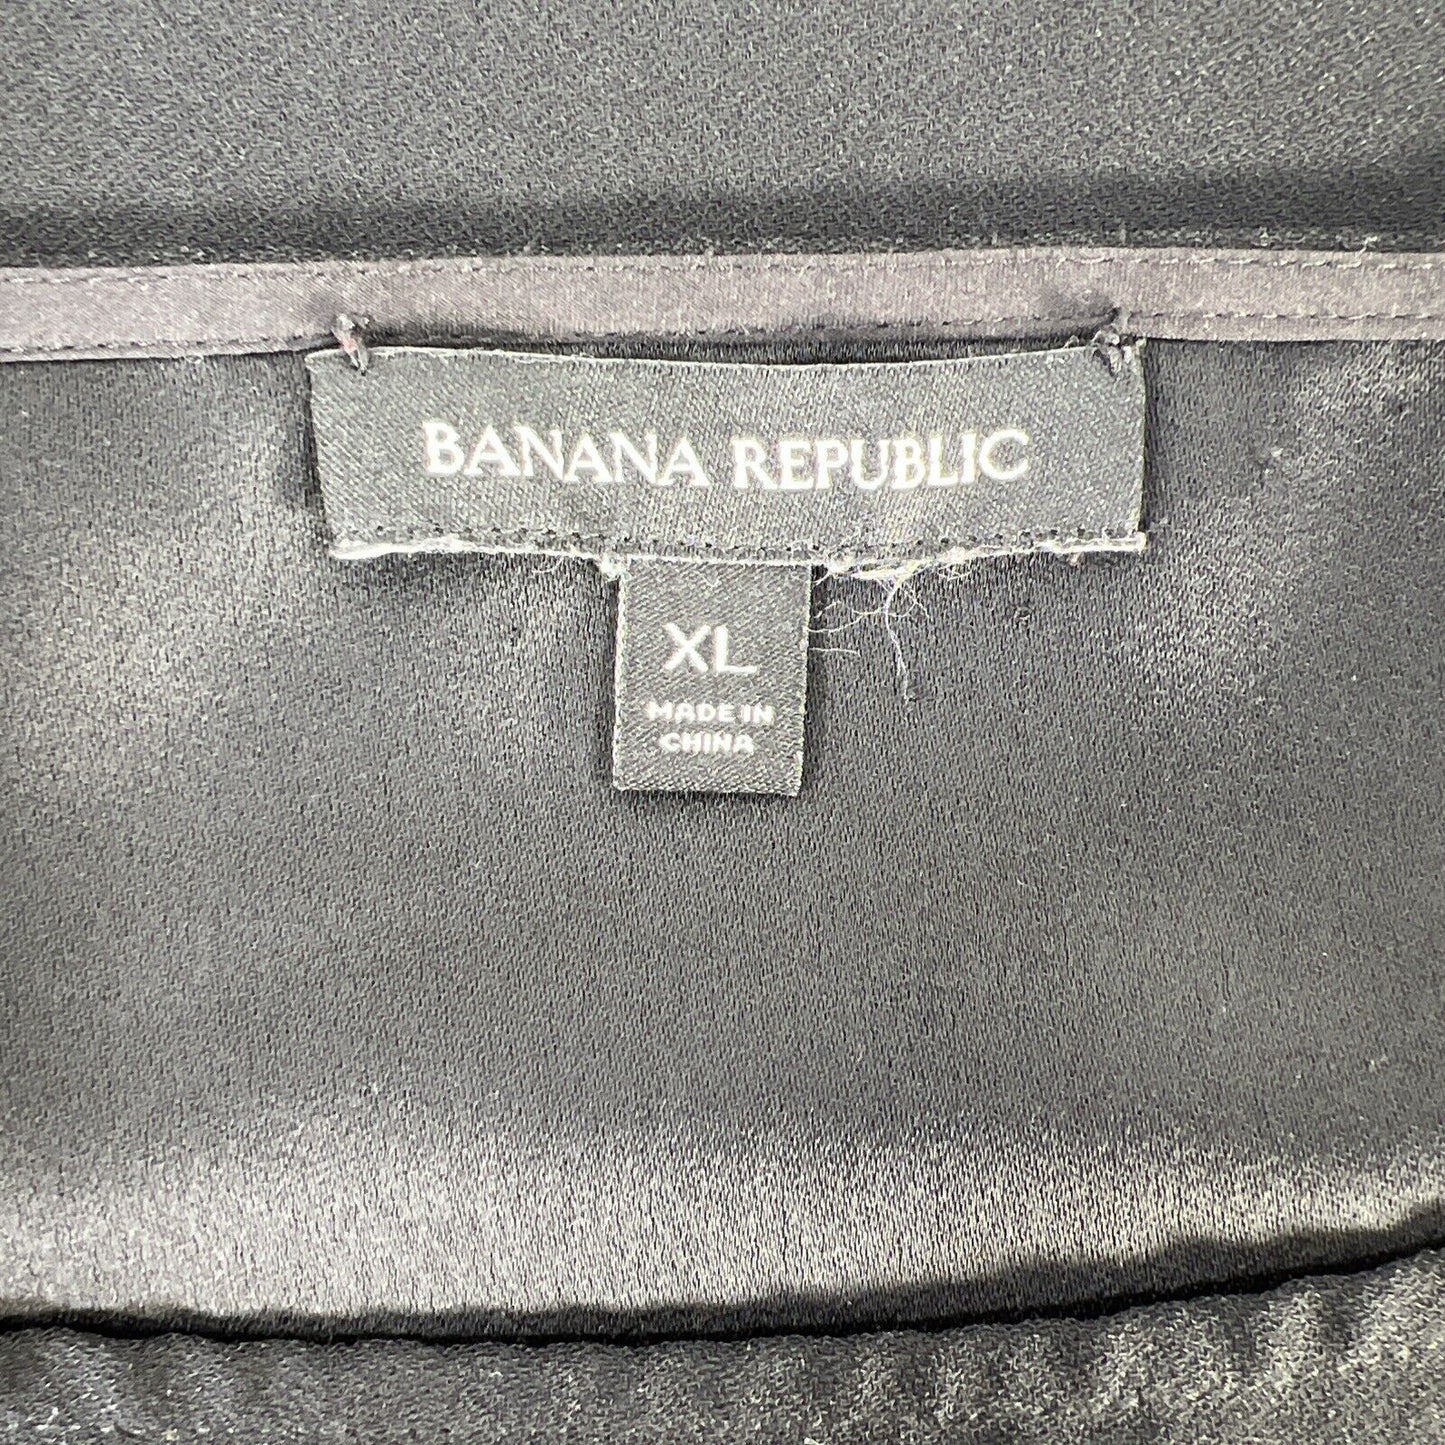 Banana Republic Women's Black Sleeveless Layered Blouse - XL